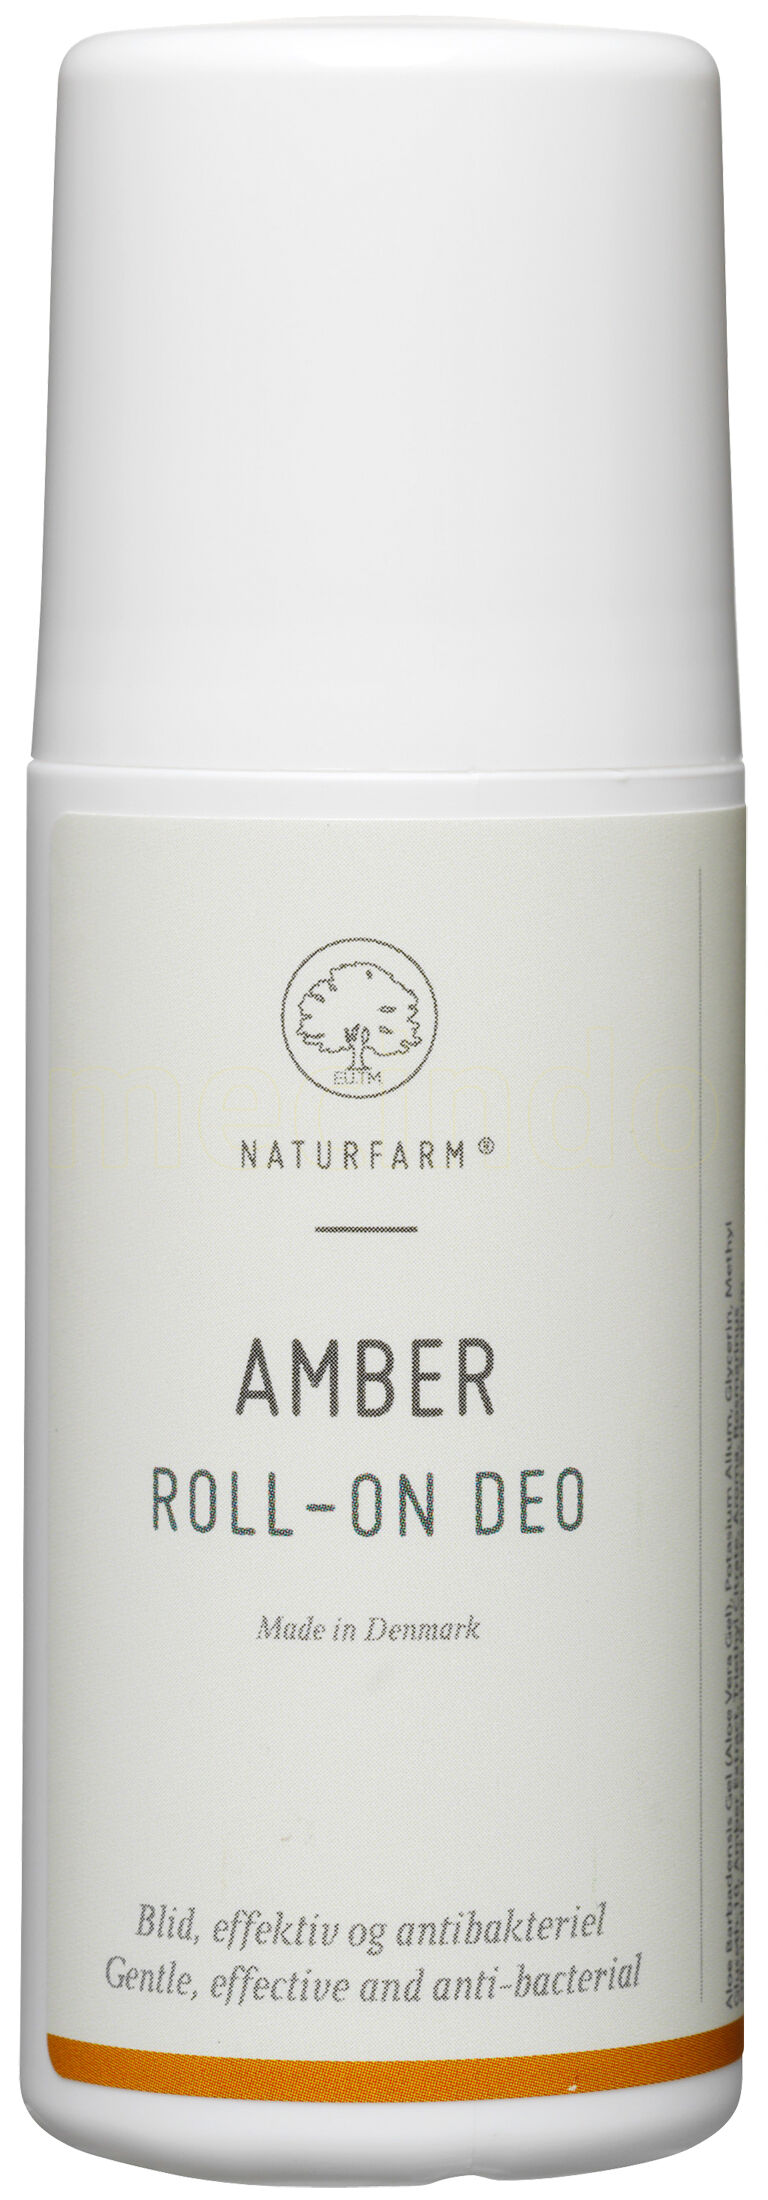 Naturfarm Amber Roll-on Deo - 60 ml